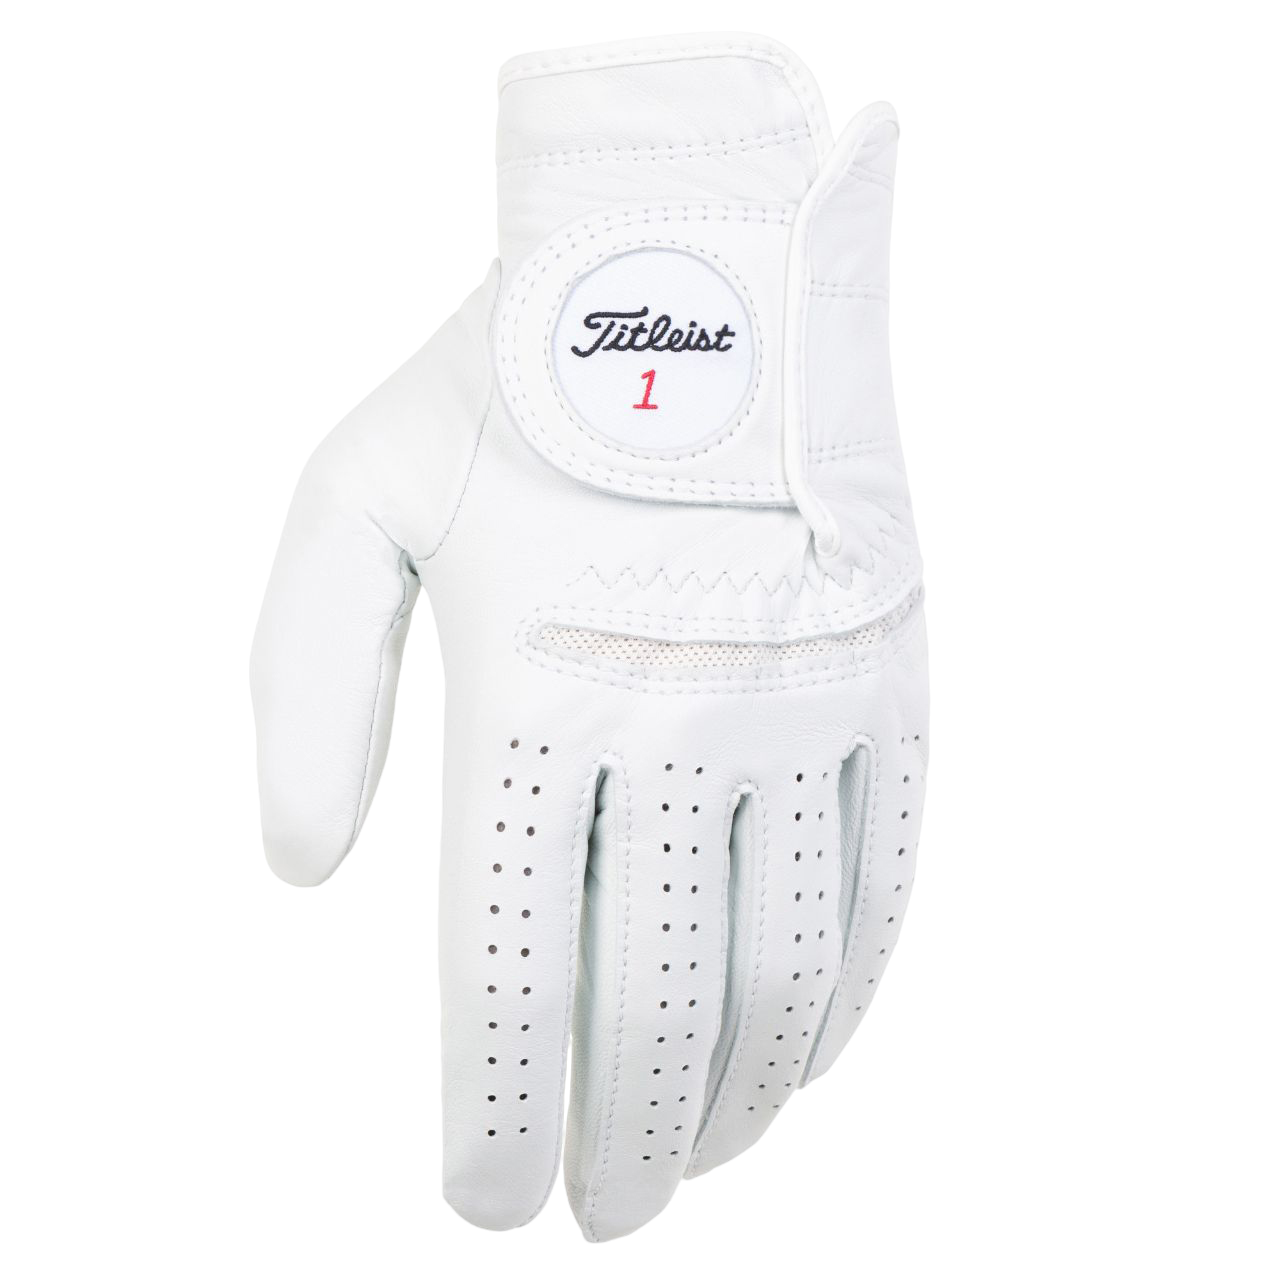 Titleist Perma-Soft Golf Glove